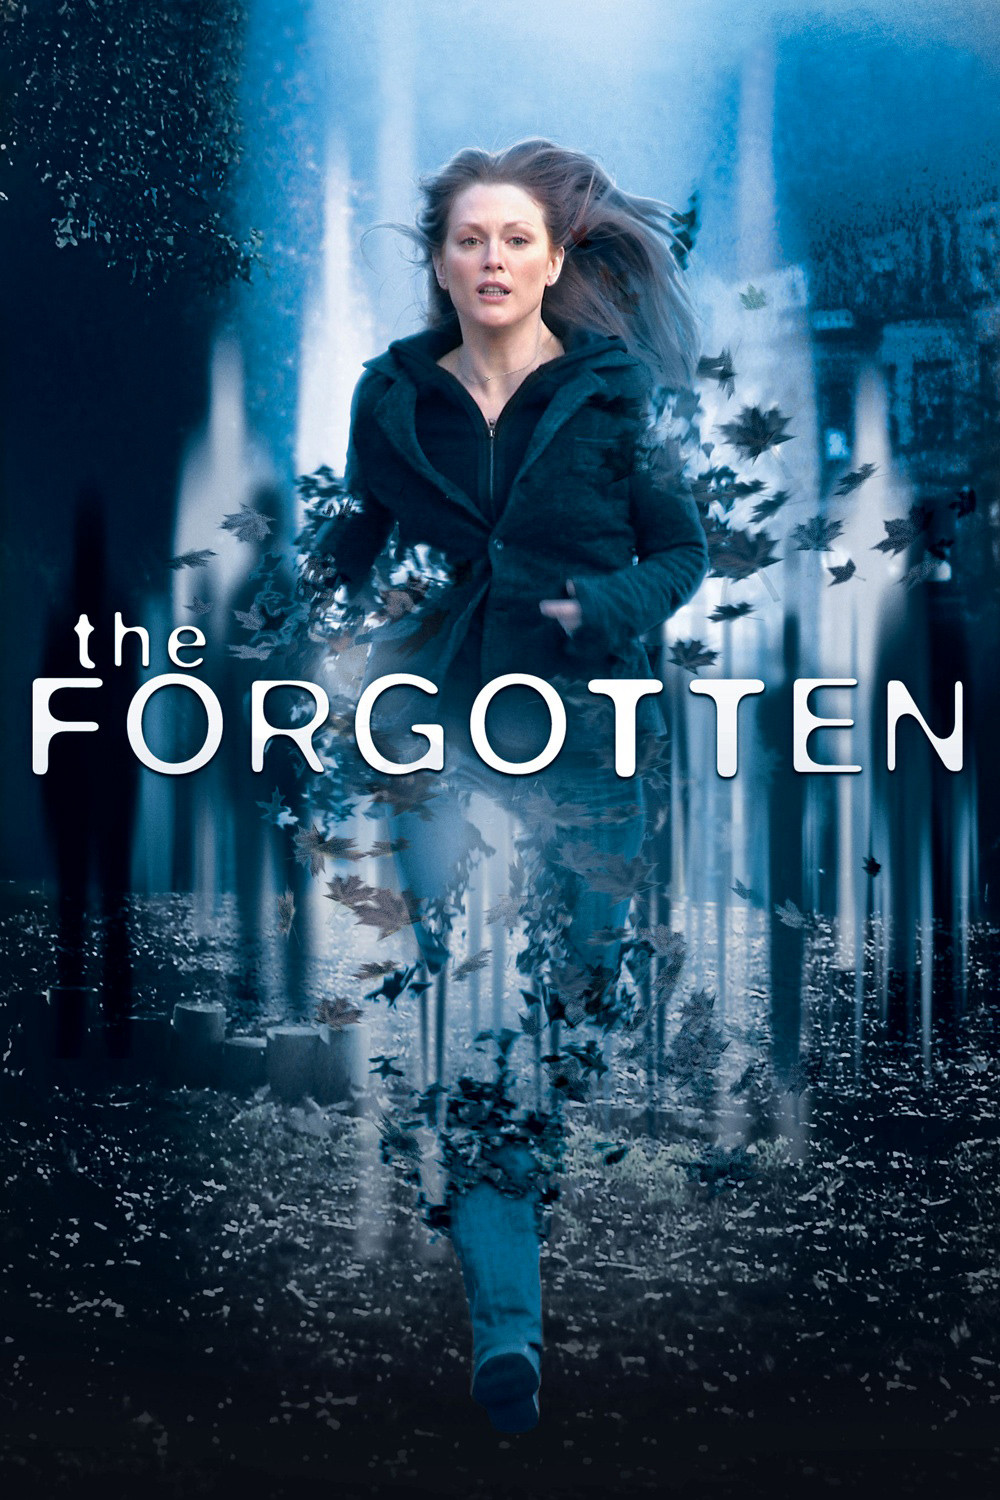 The Forgotten (2004 film) - Wikipedia